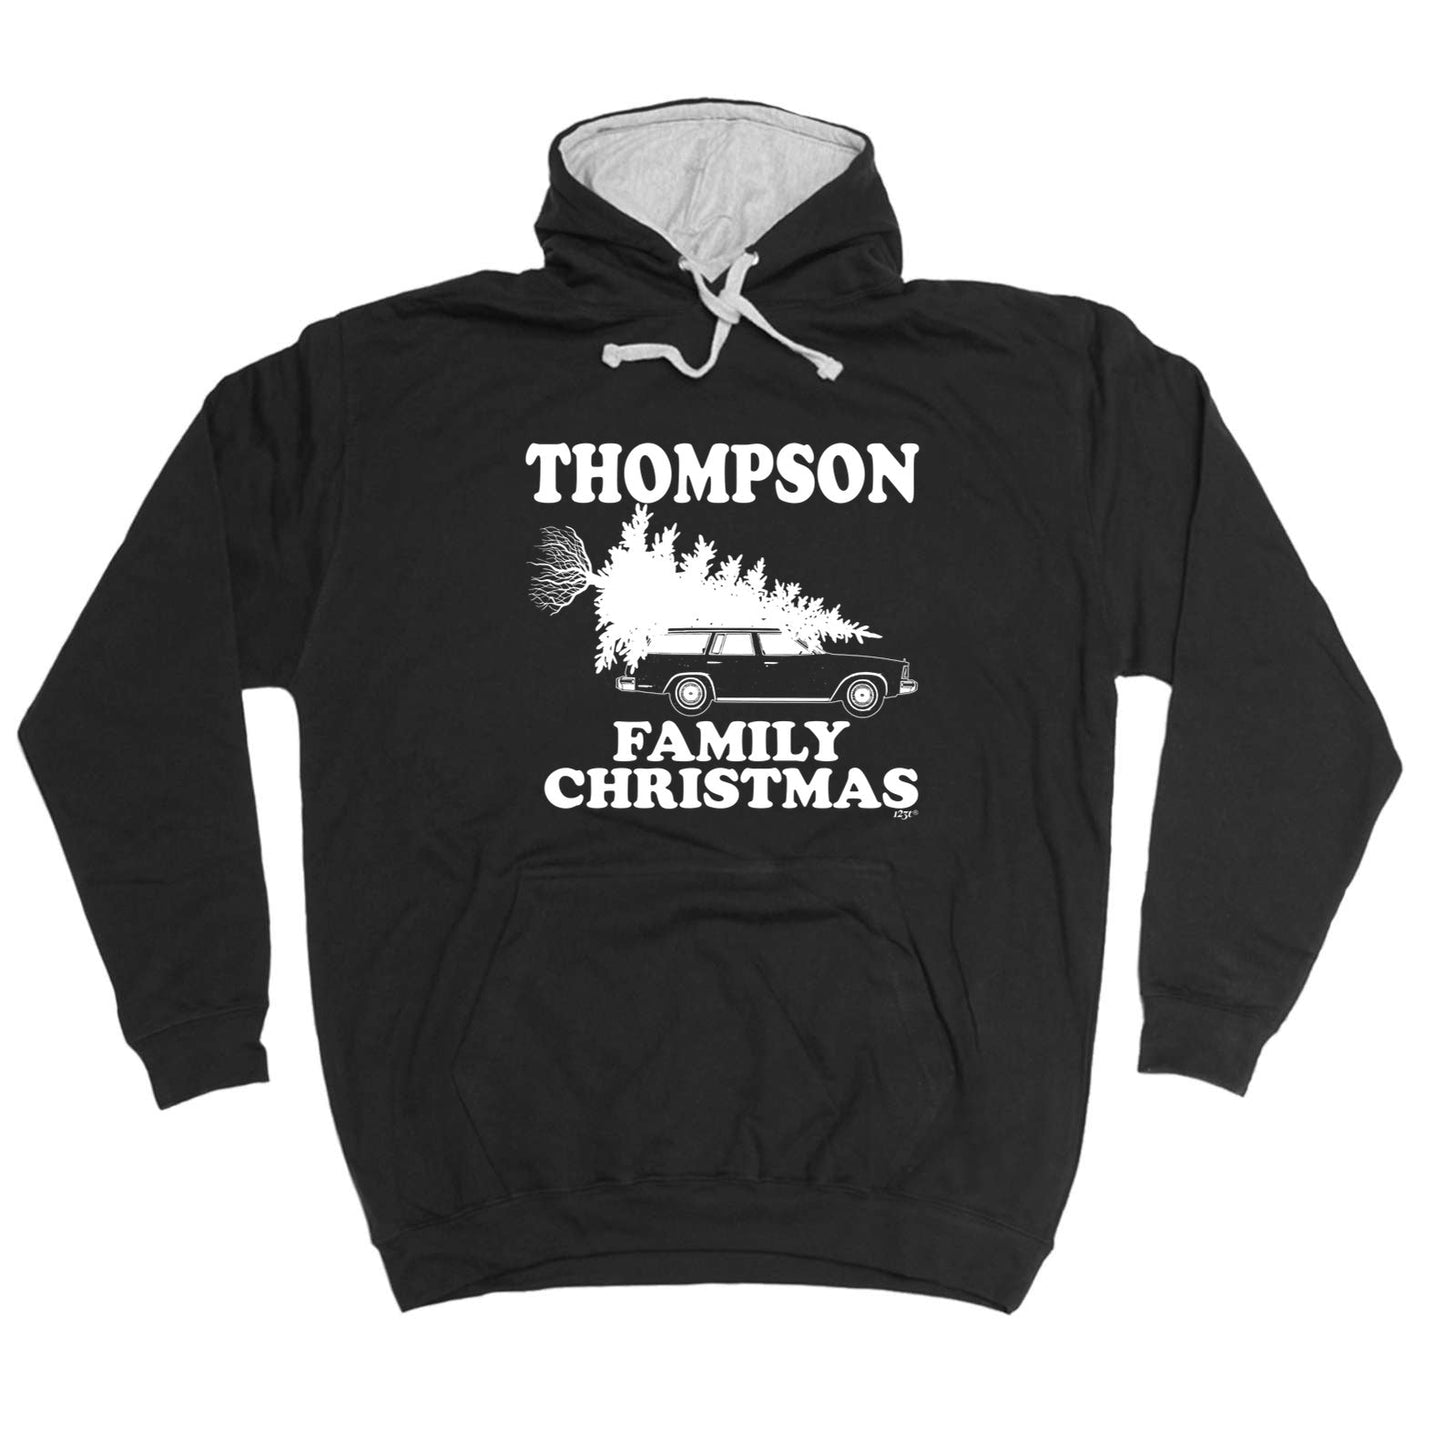 Family Christmas Thompson - Xmas Novelty Hoodies Hoodie